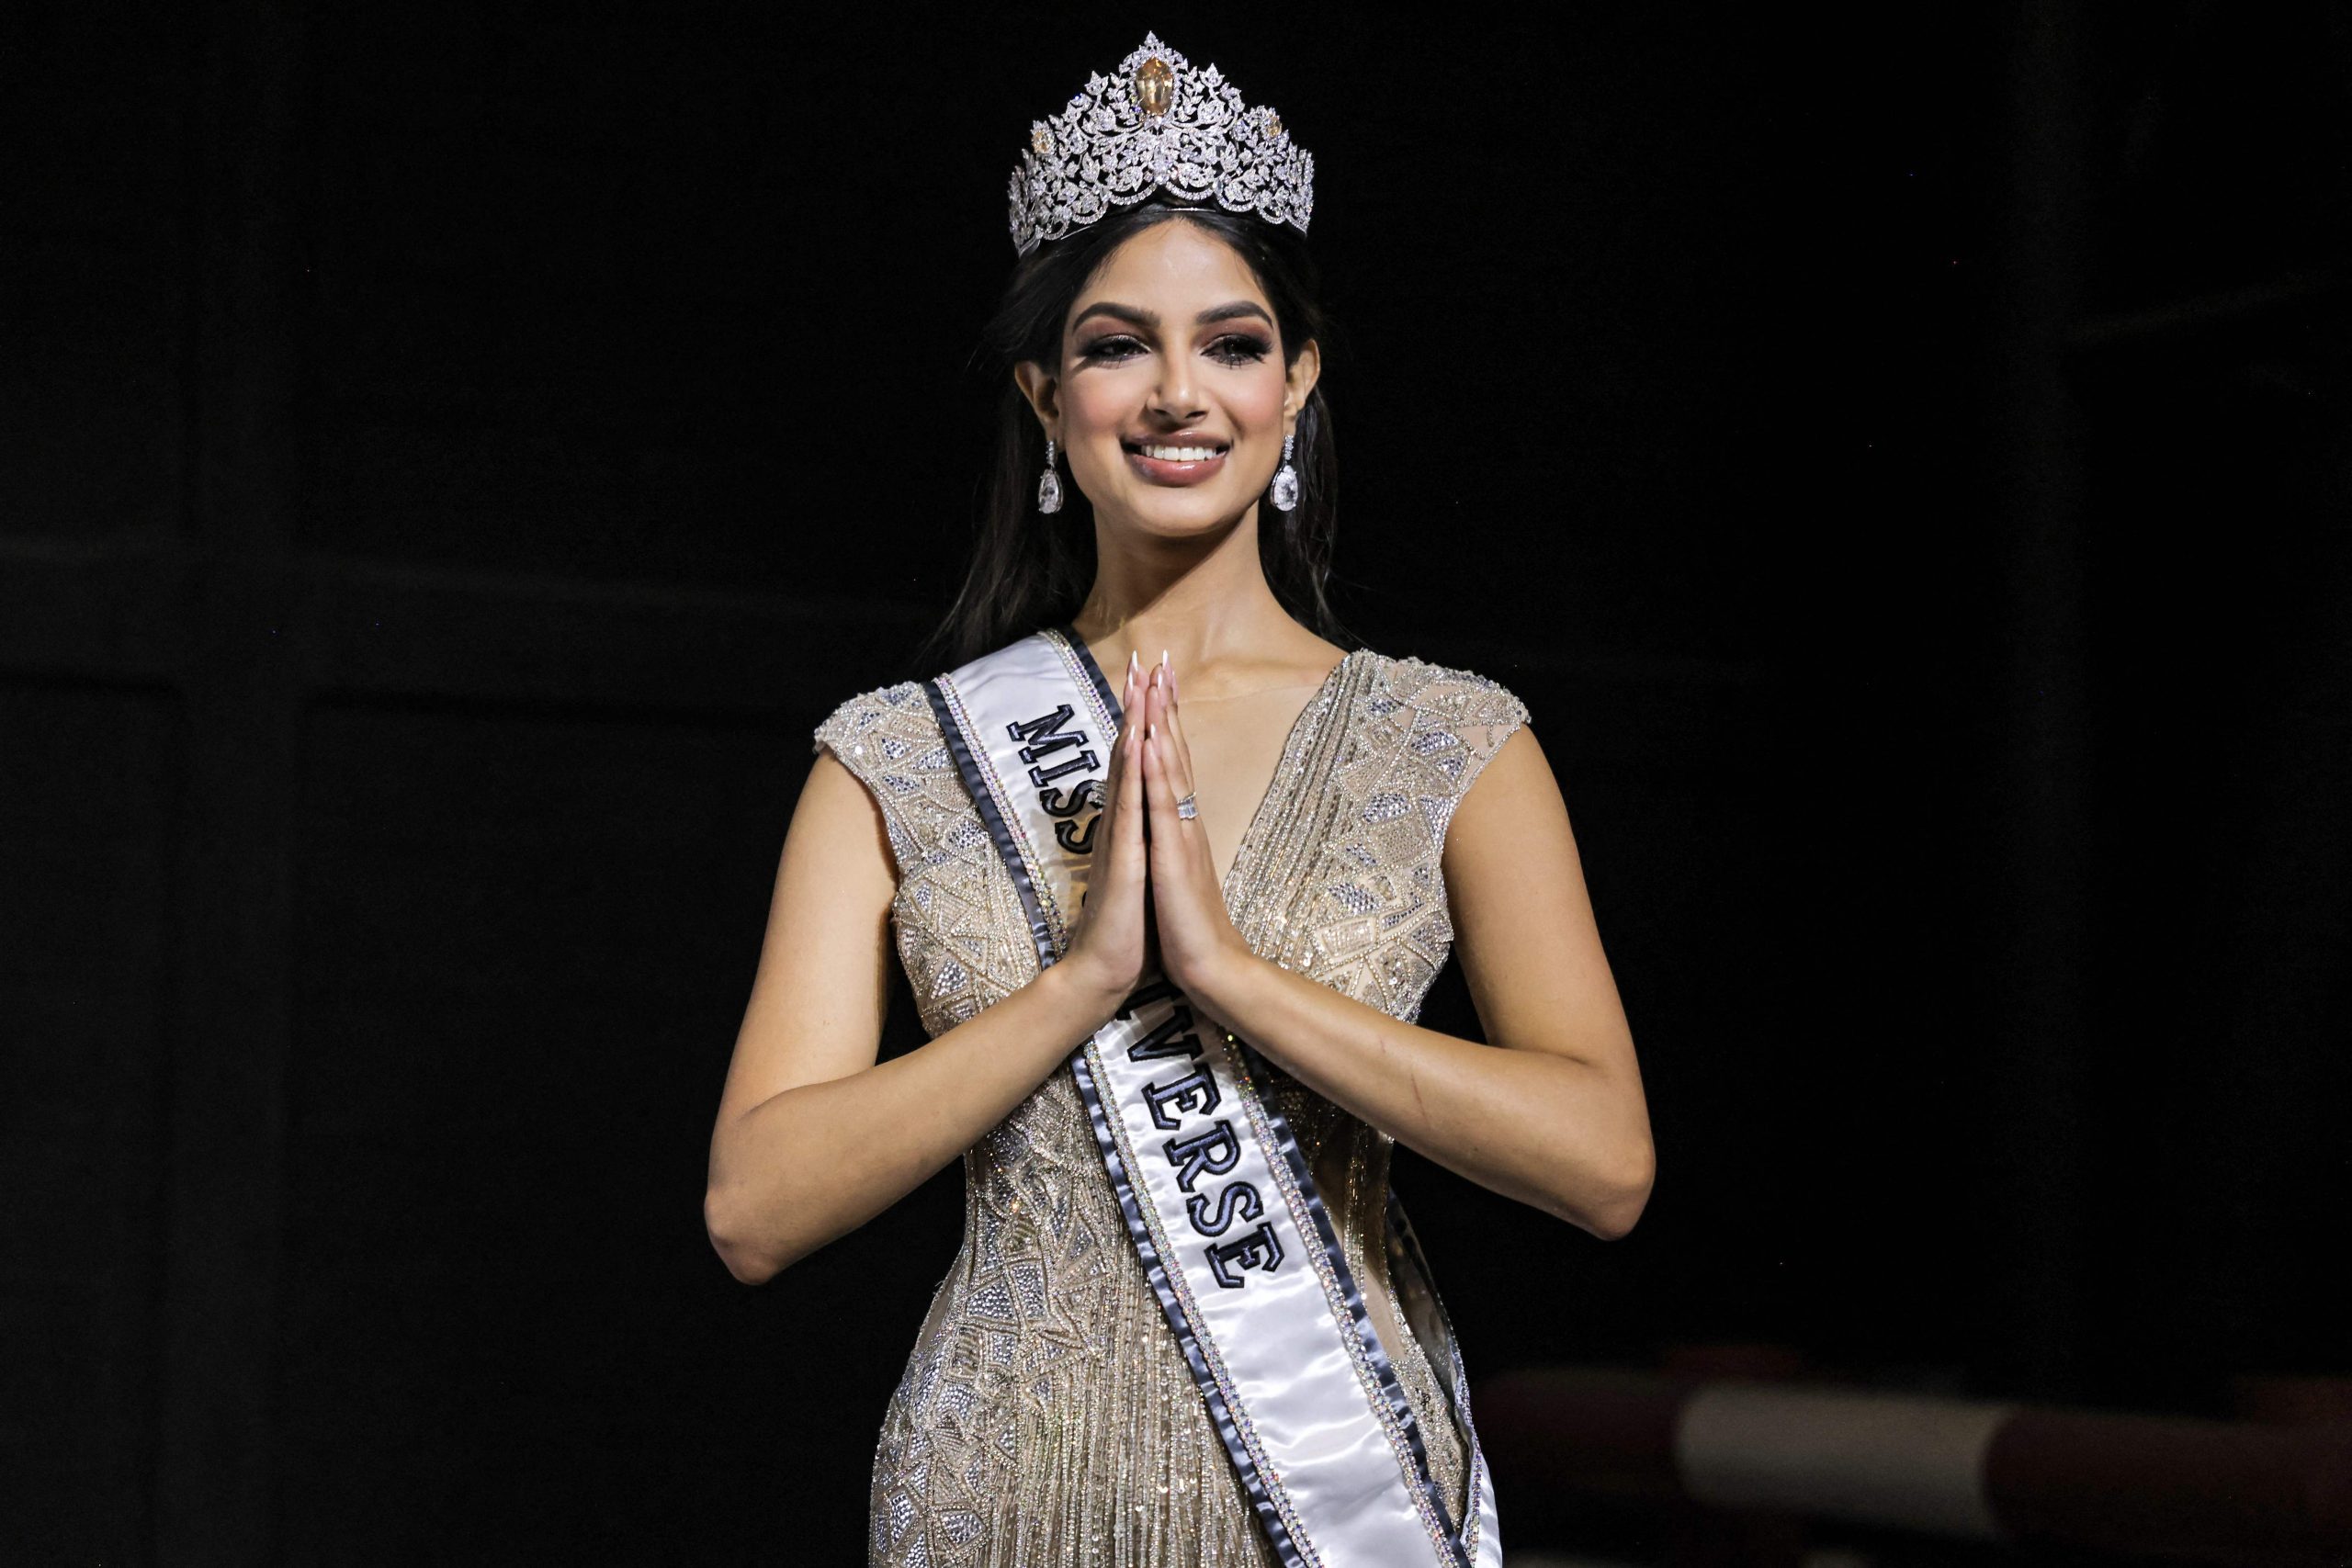 Modelo indiana Harnazz Sandhu eleita Miss Universo 2021